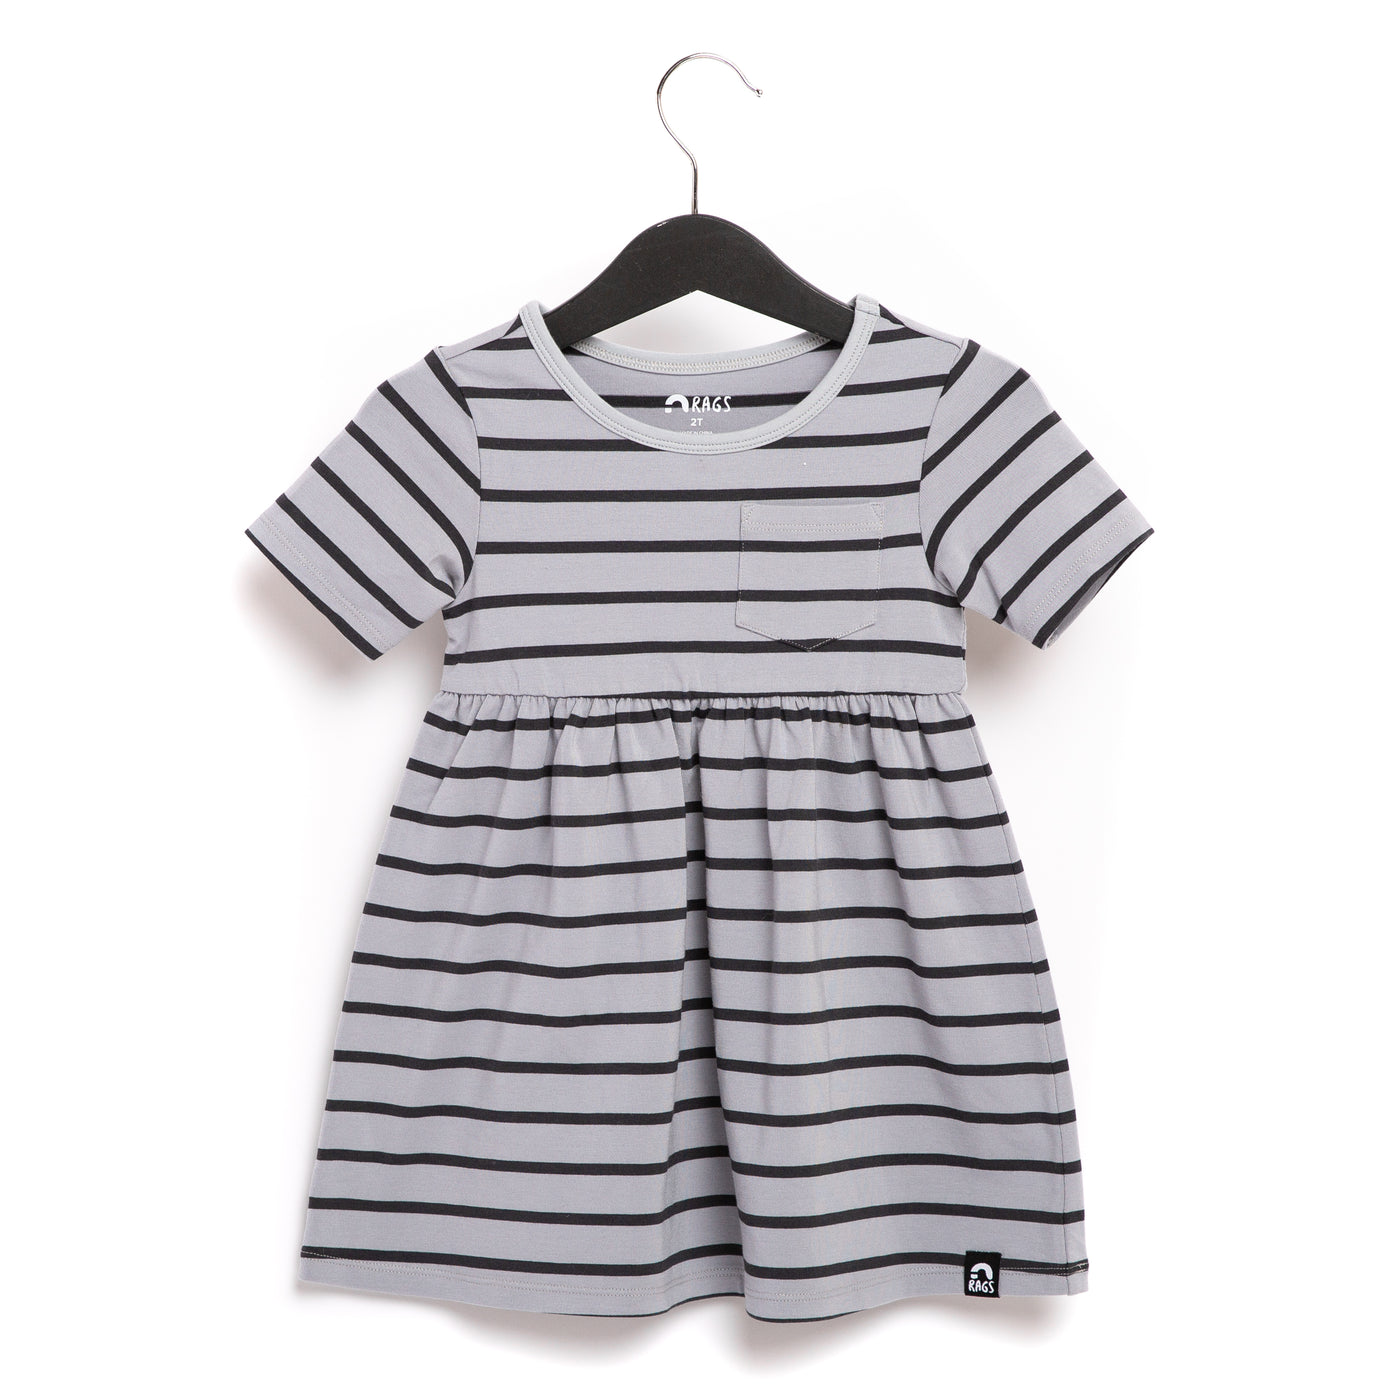 Essentials Short Sleeve with Chest Pocket Dress - 'Quarry Stripe (FINAL SALE)'